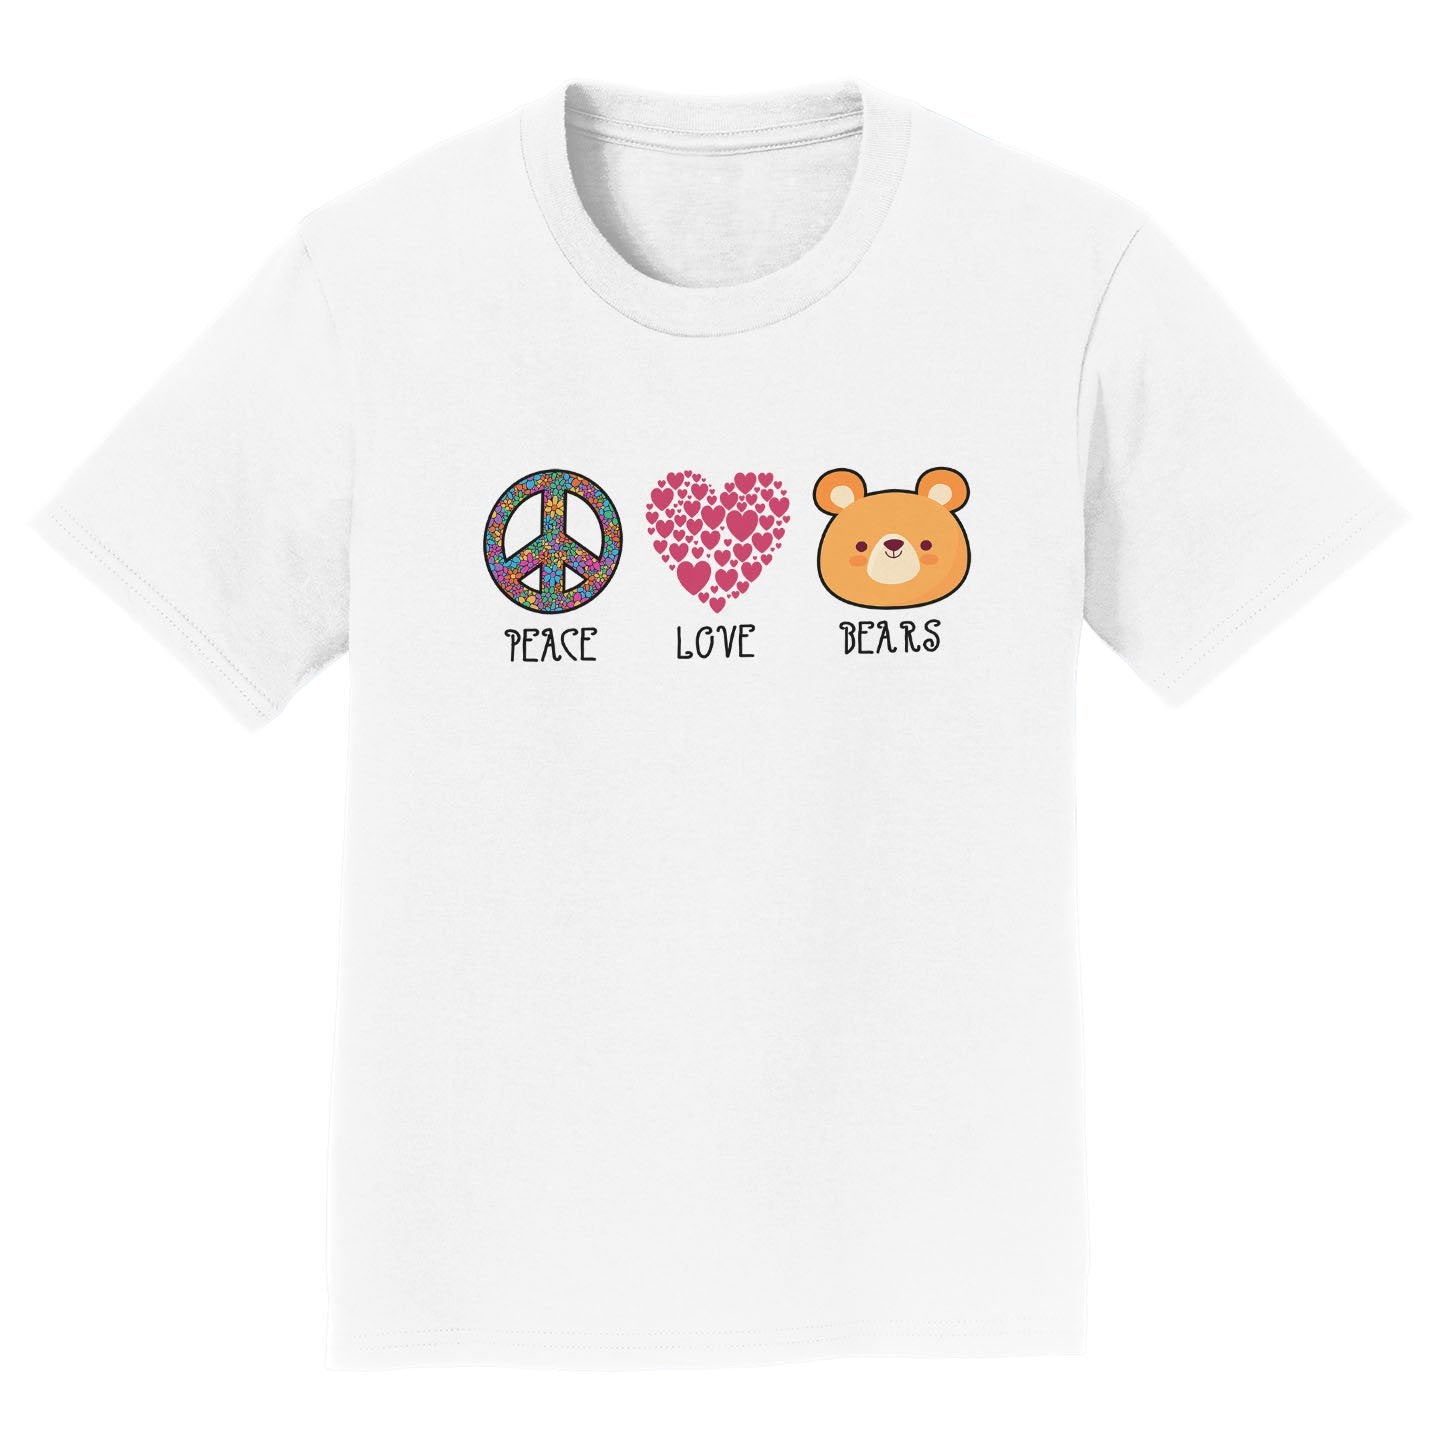 Peace Love Bears - Kids' Unisex T-Shirt